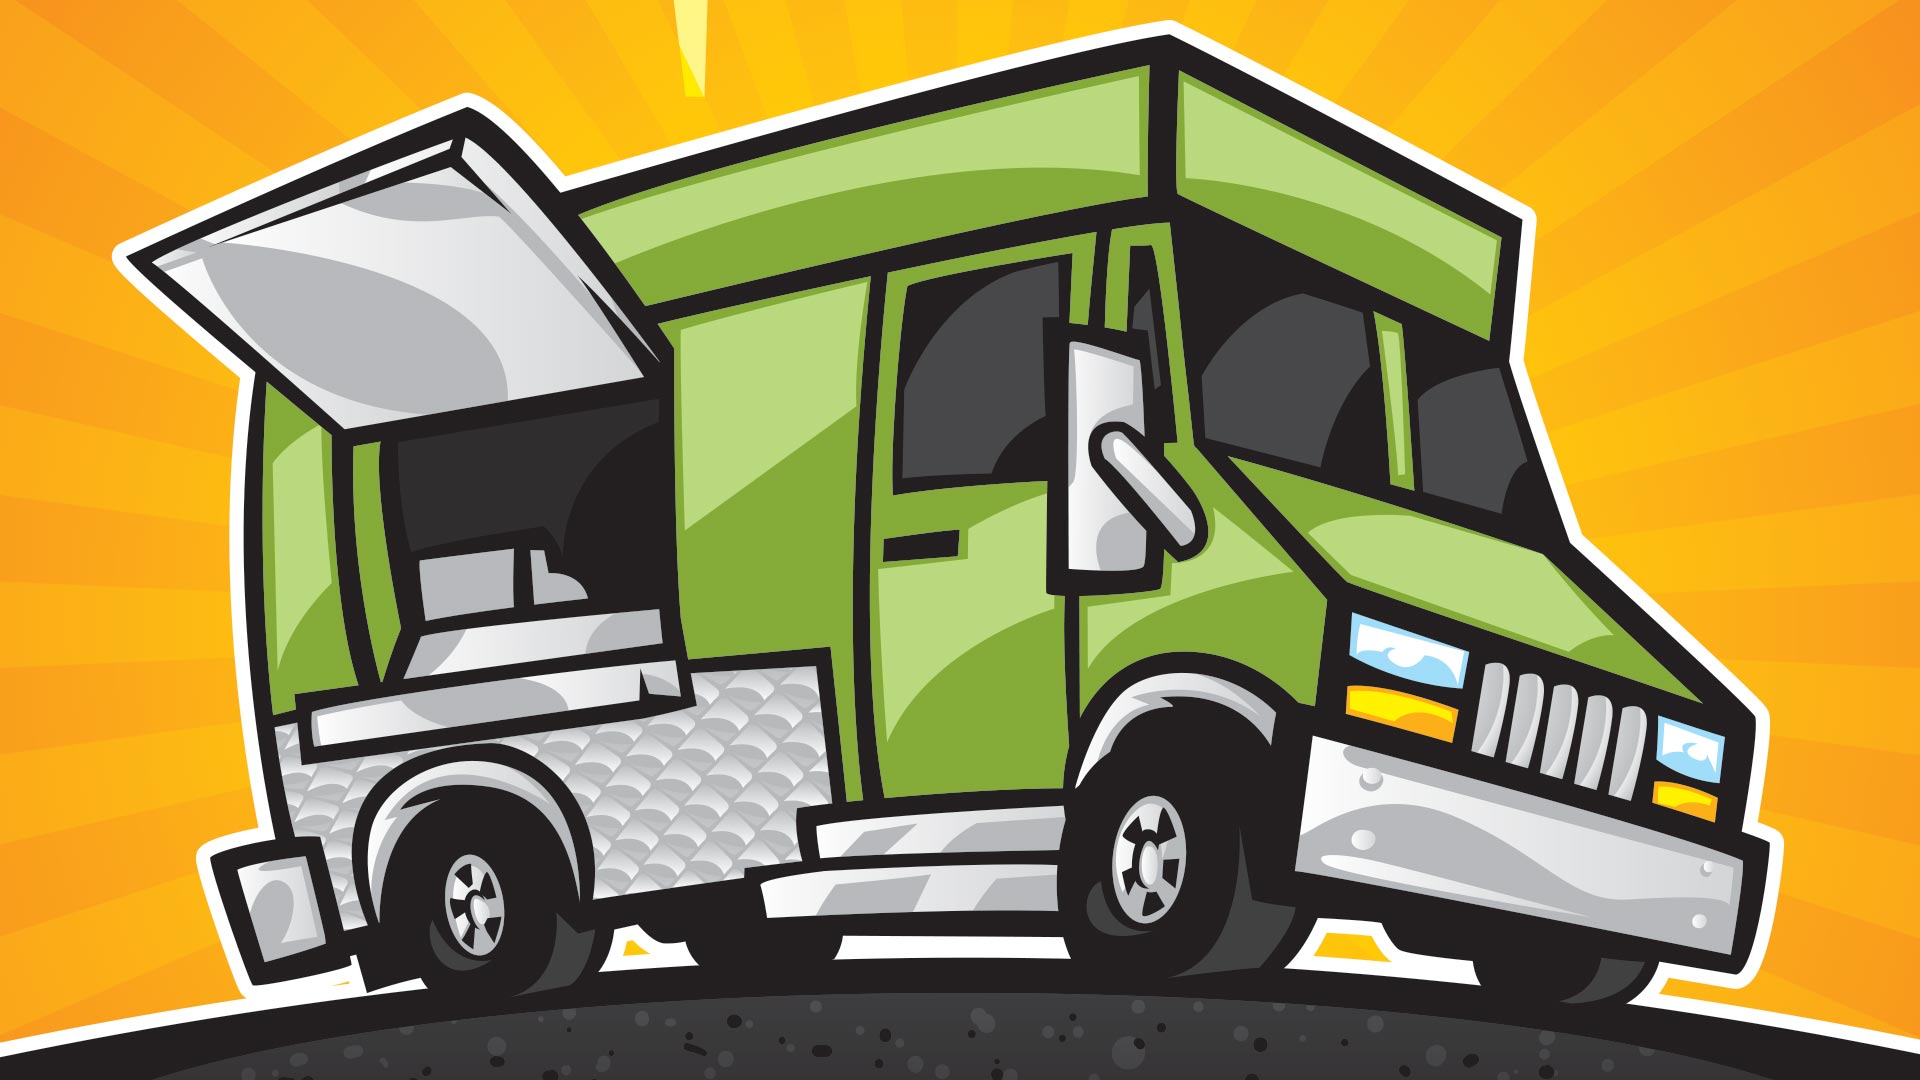 Clip art of green food truck